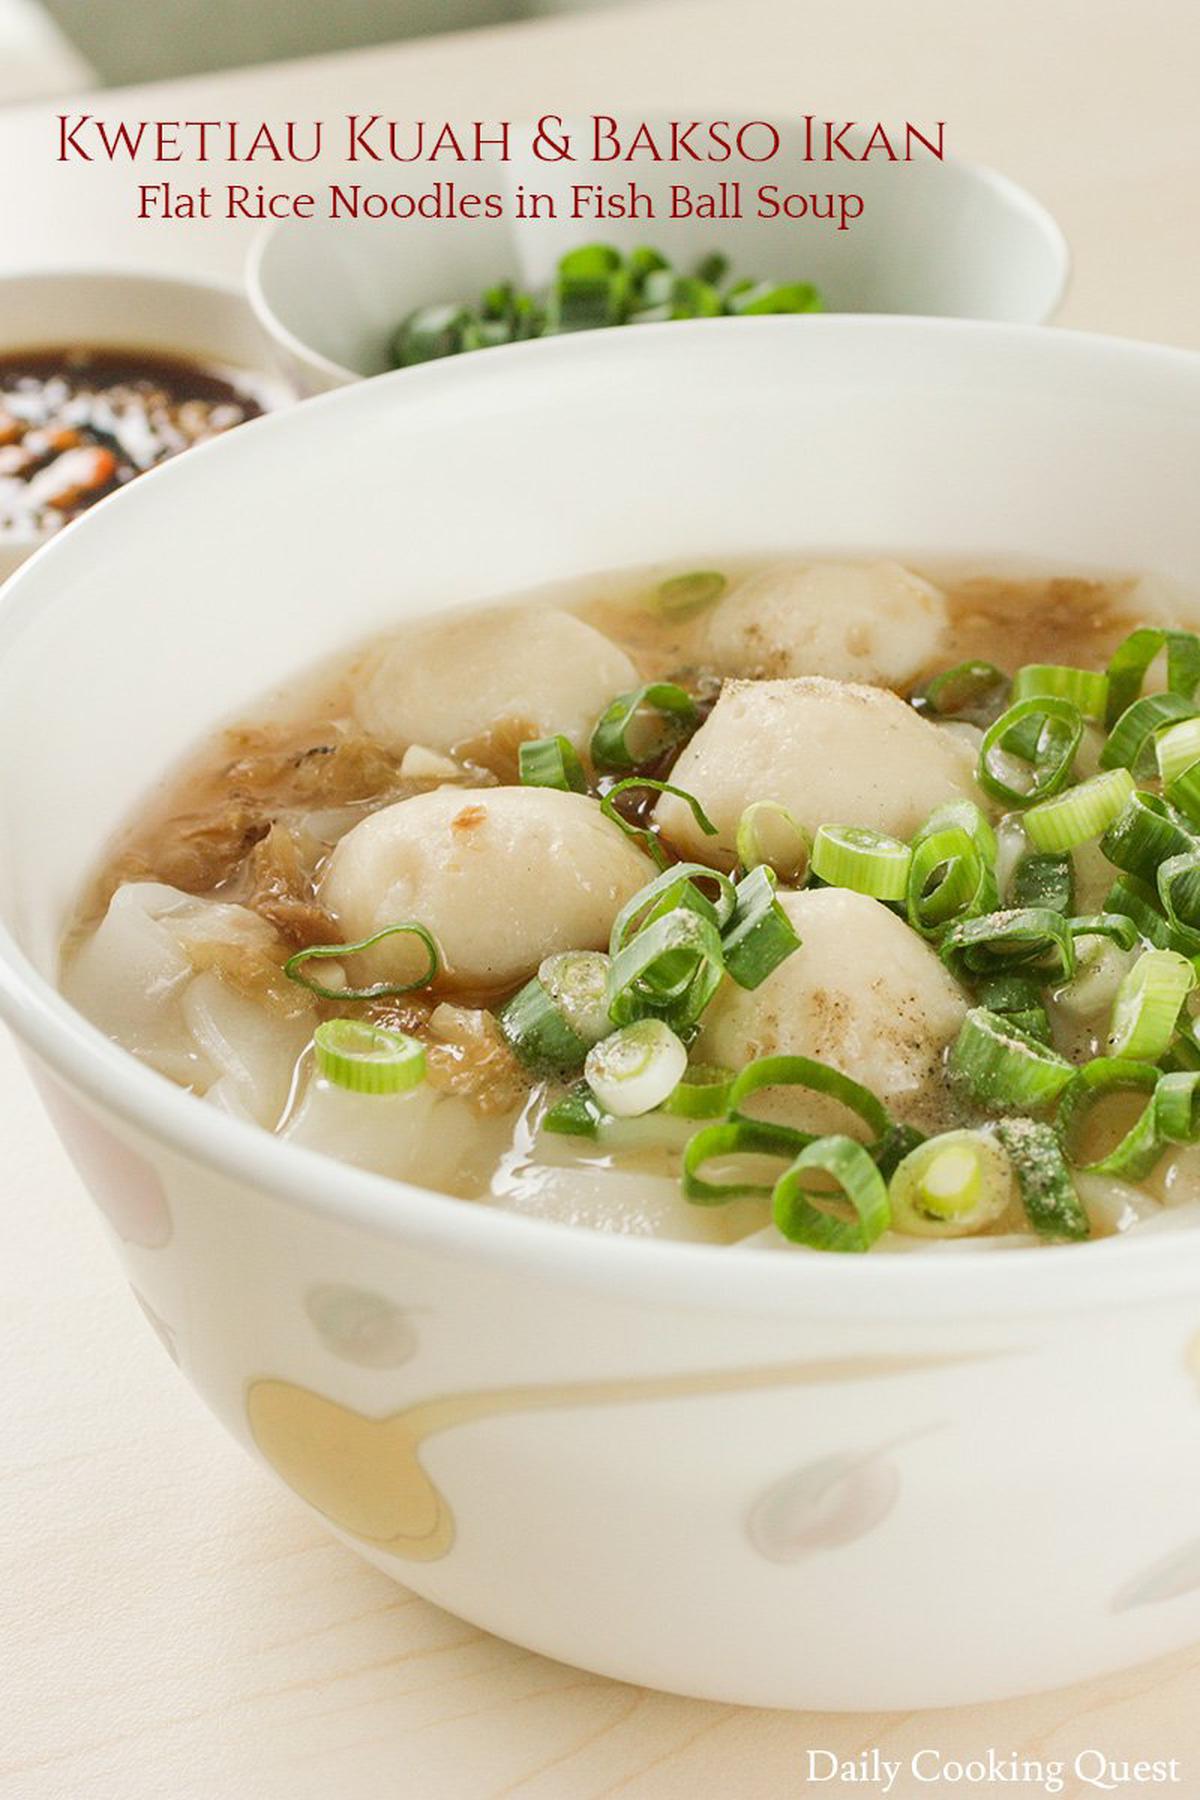 Kwetiau Kuah dan Bakso Ikan – Flat Rice Noodles in Fish Ball Soup